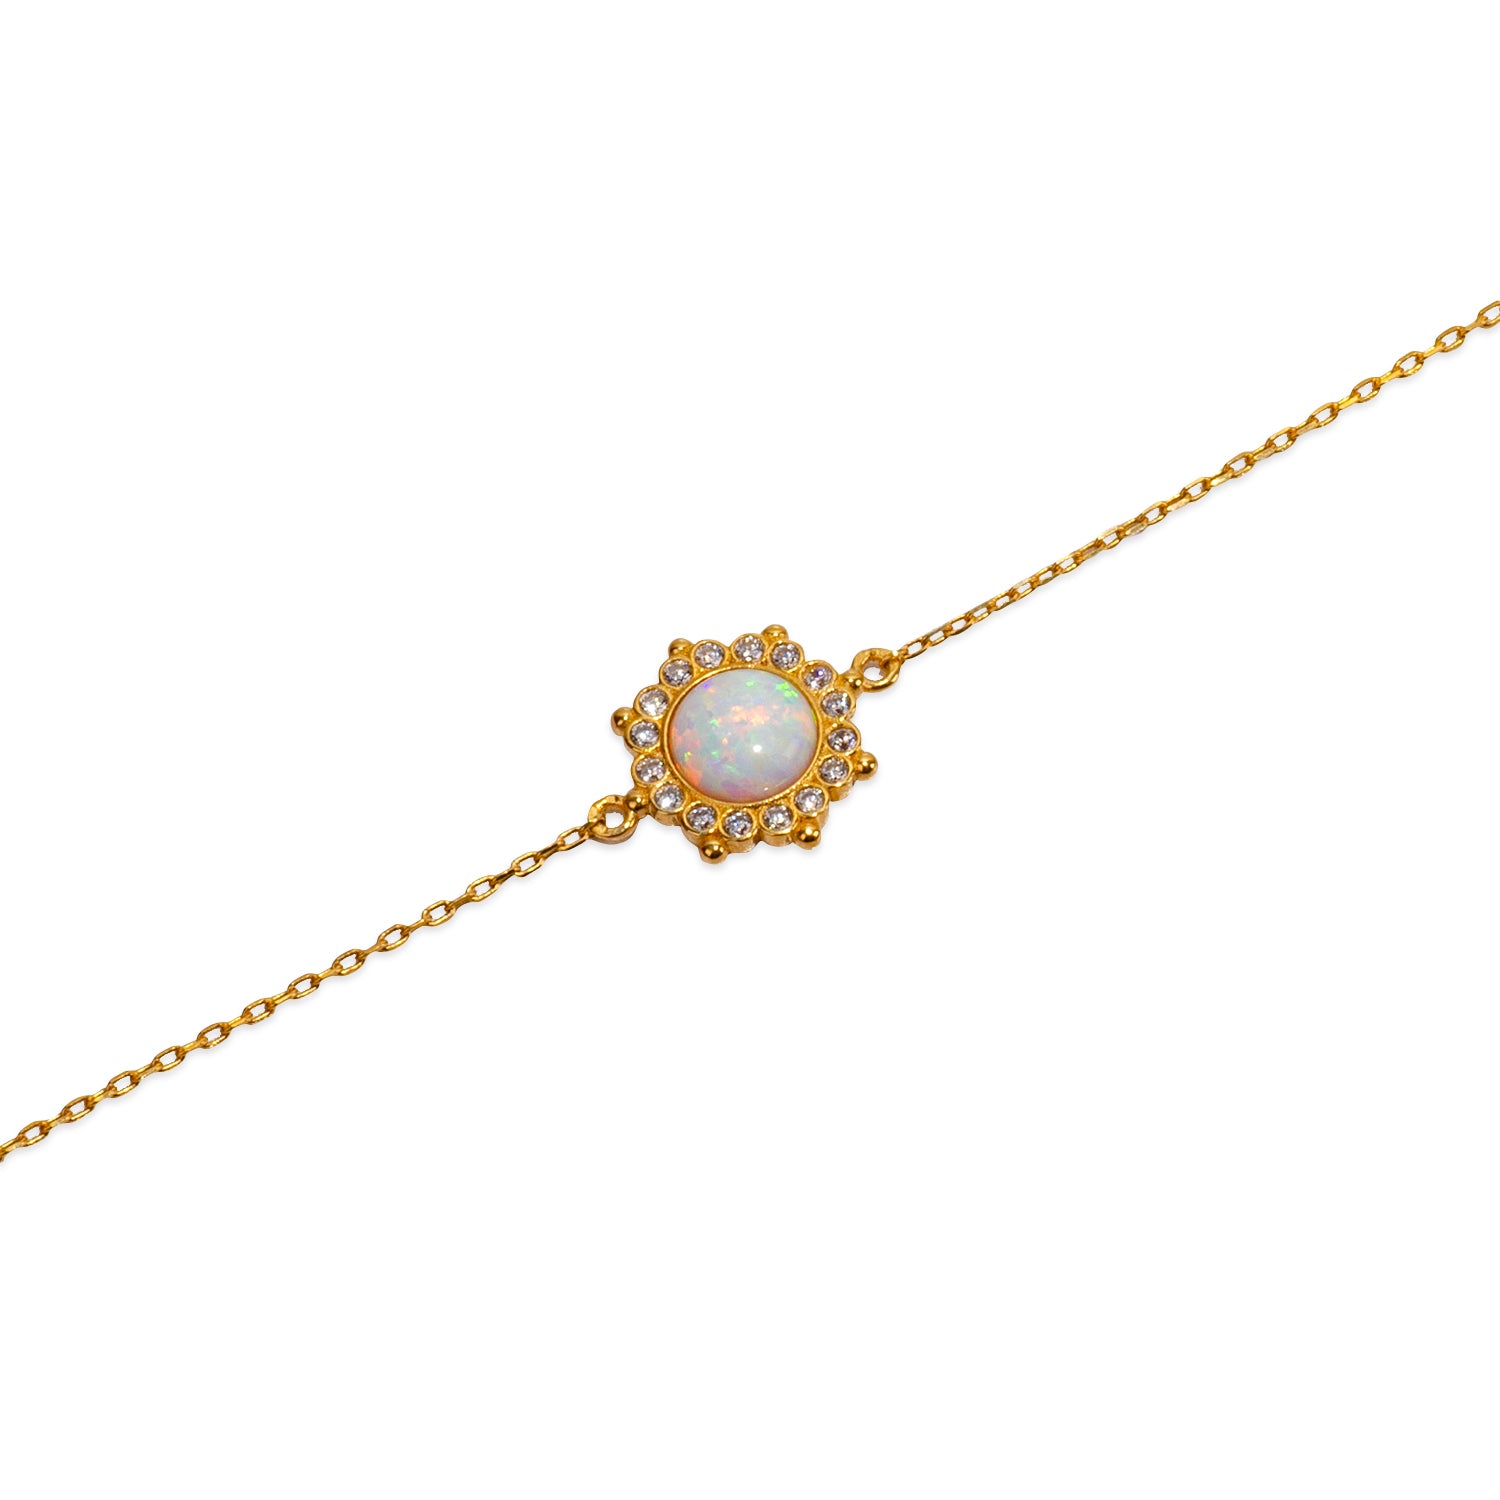 Sun White Opal 24K Gold Bracelet - Gold Vermeil Bracelets - Pretland | Spiritual Crystals & Jewelry